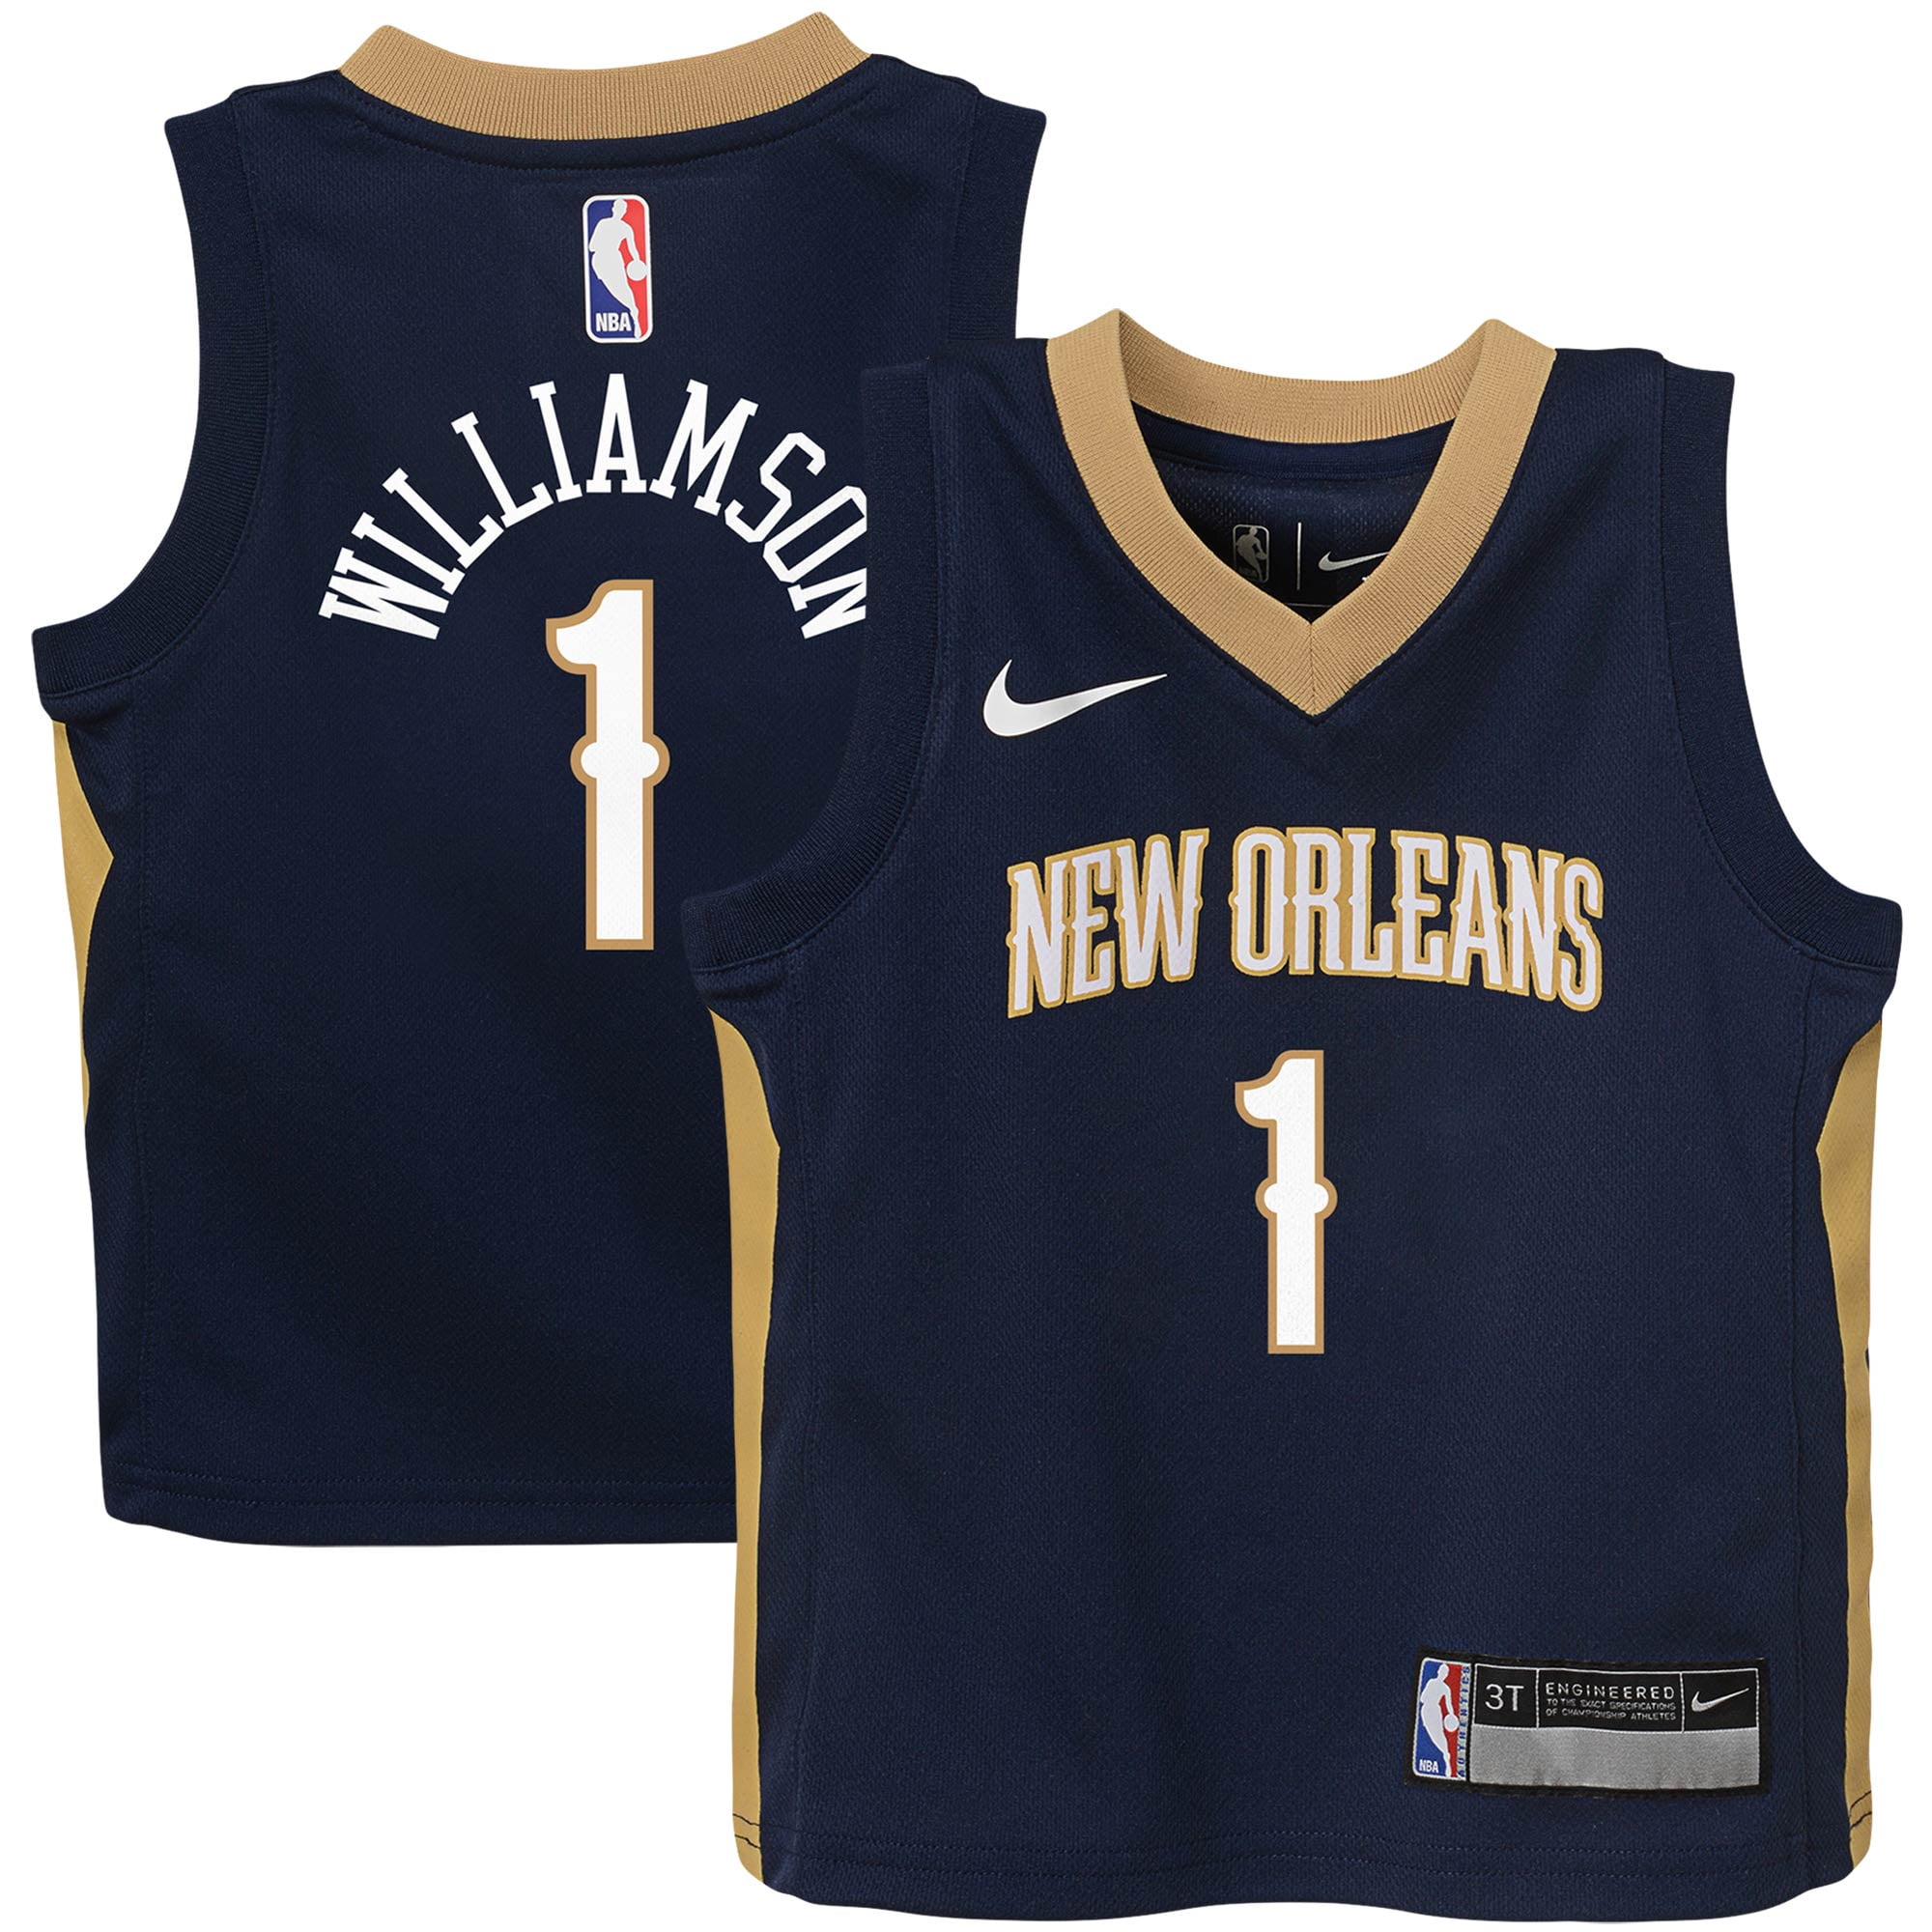 zion williamson new orleans jersey